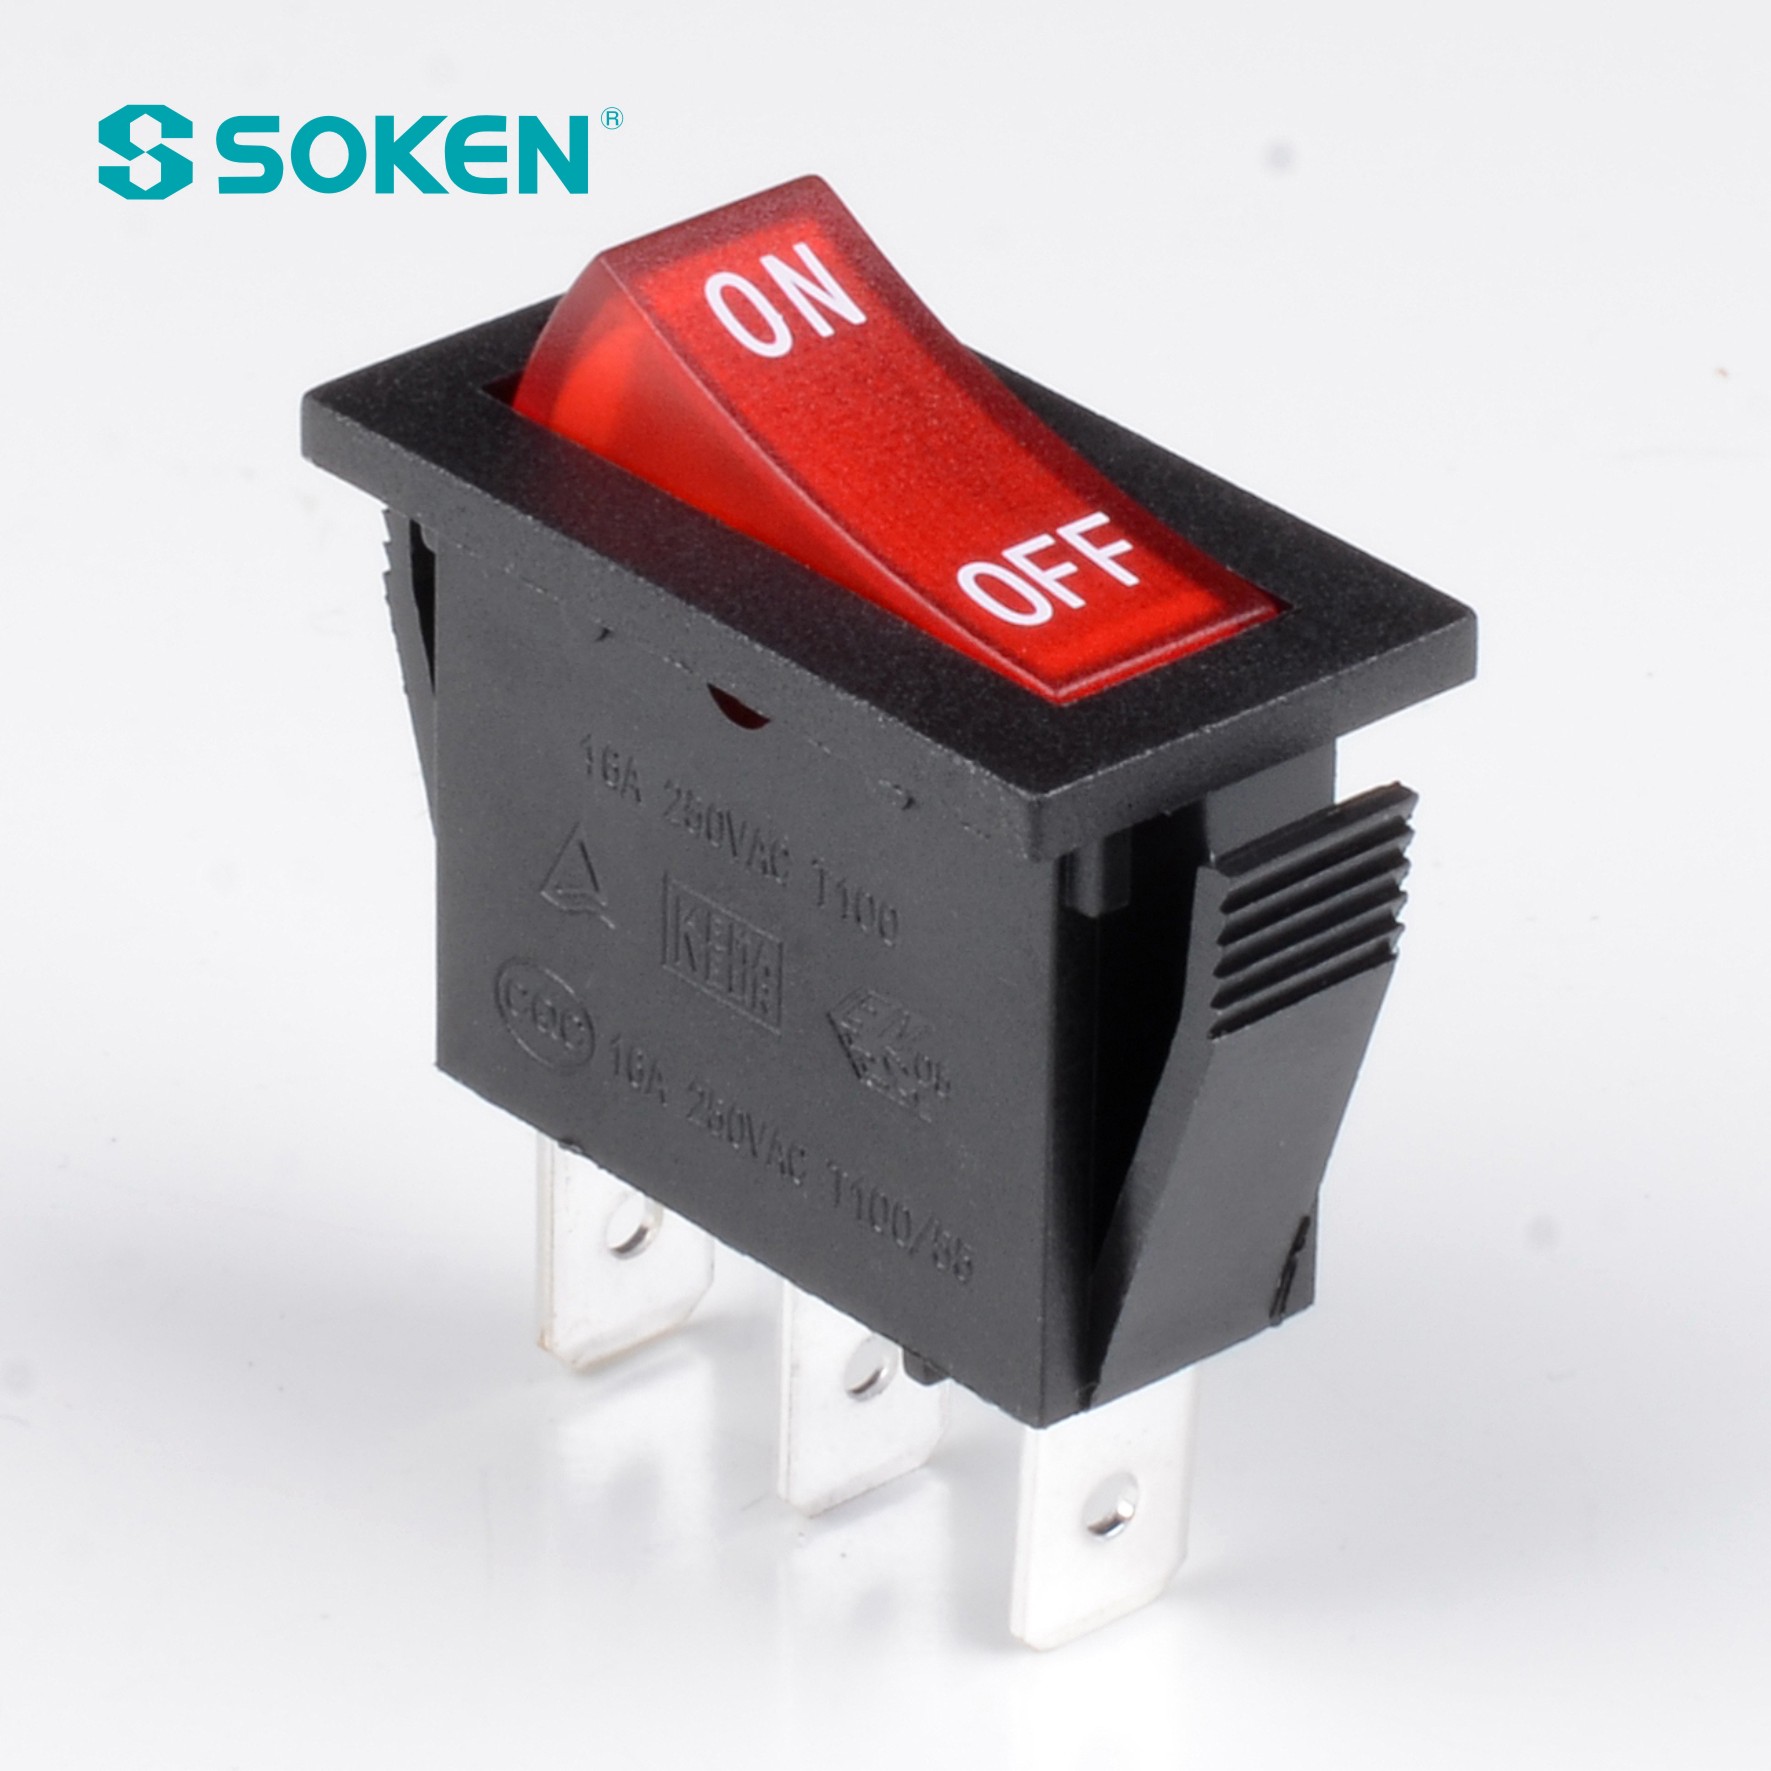 Soken Rk1-16 1X2 Rocker Switch-də